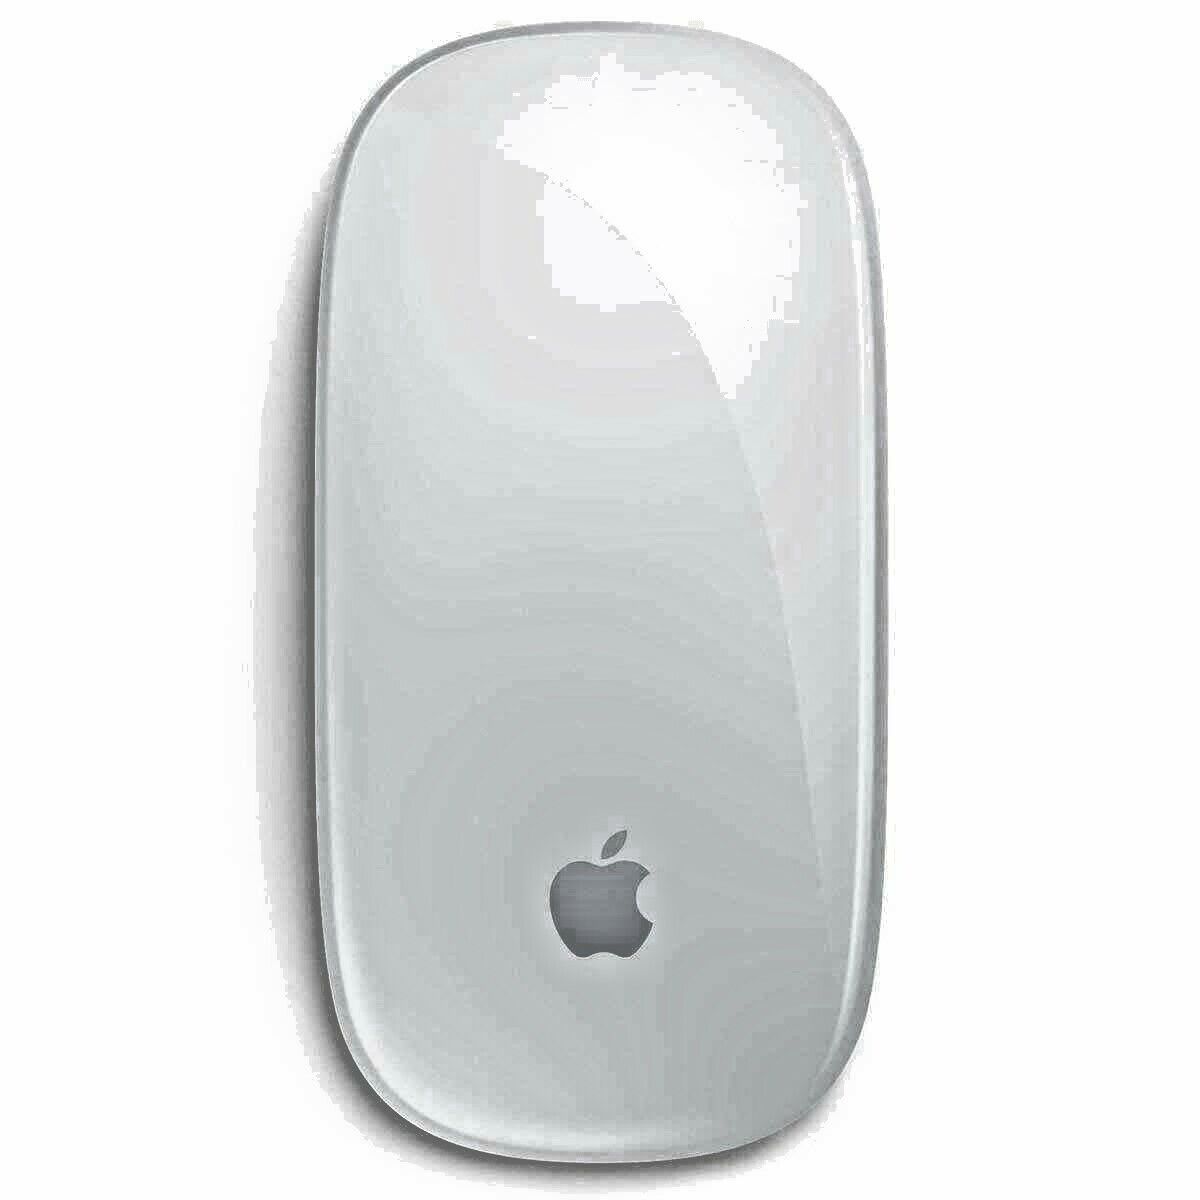 Apple Mouse-Bluetooth AA Battery Magic for iMac Mac Mini Macbook Pro First Gen 0